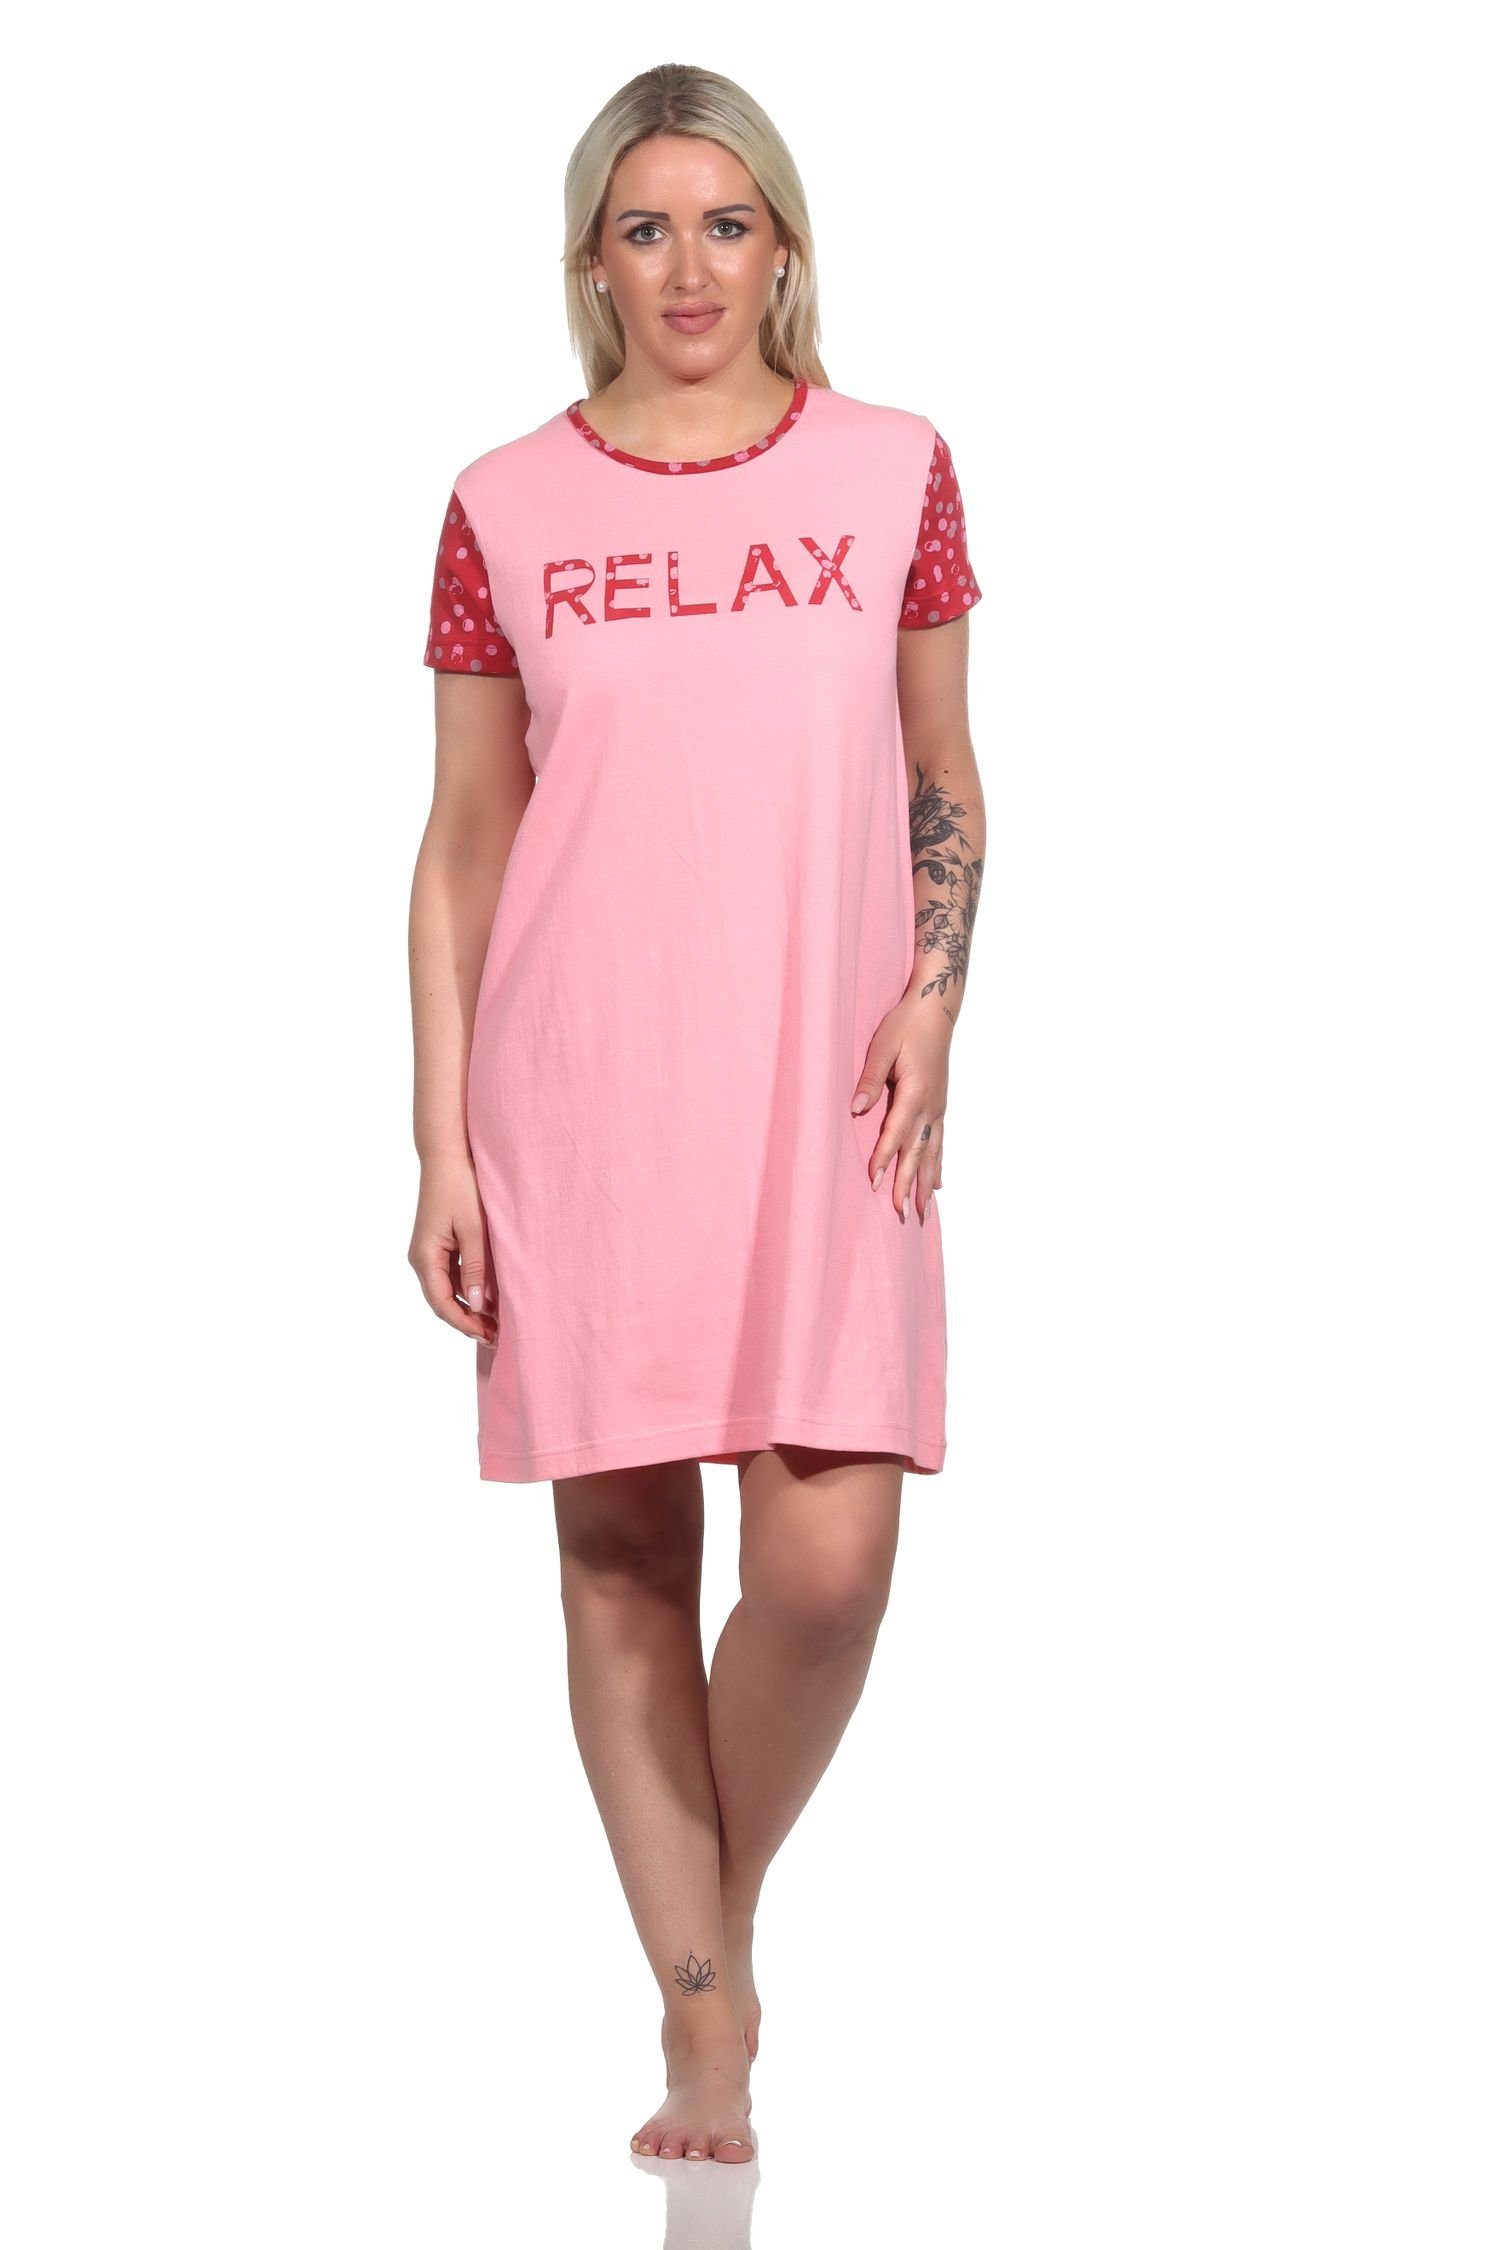 RELAX by Normann Nachthemd Kurzarm Damen Nachthemd im Casual Look - 122 10 757 rosa